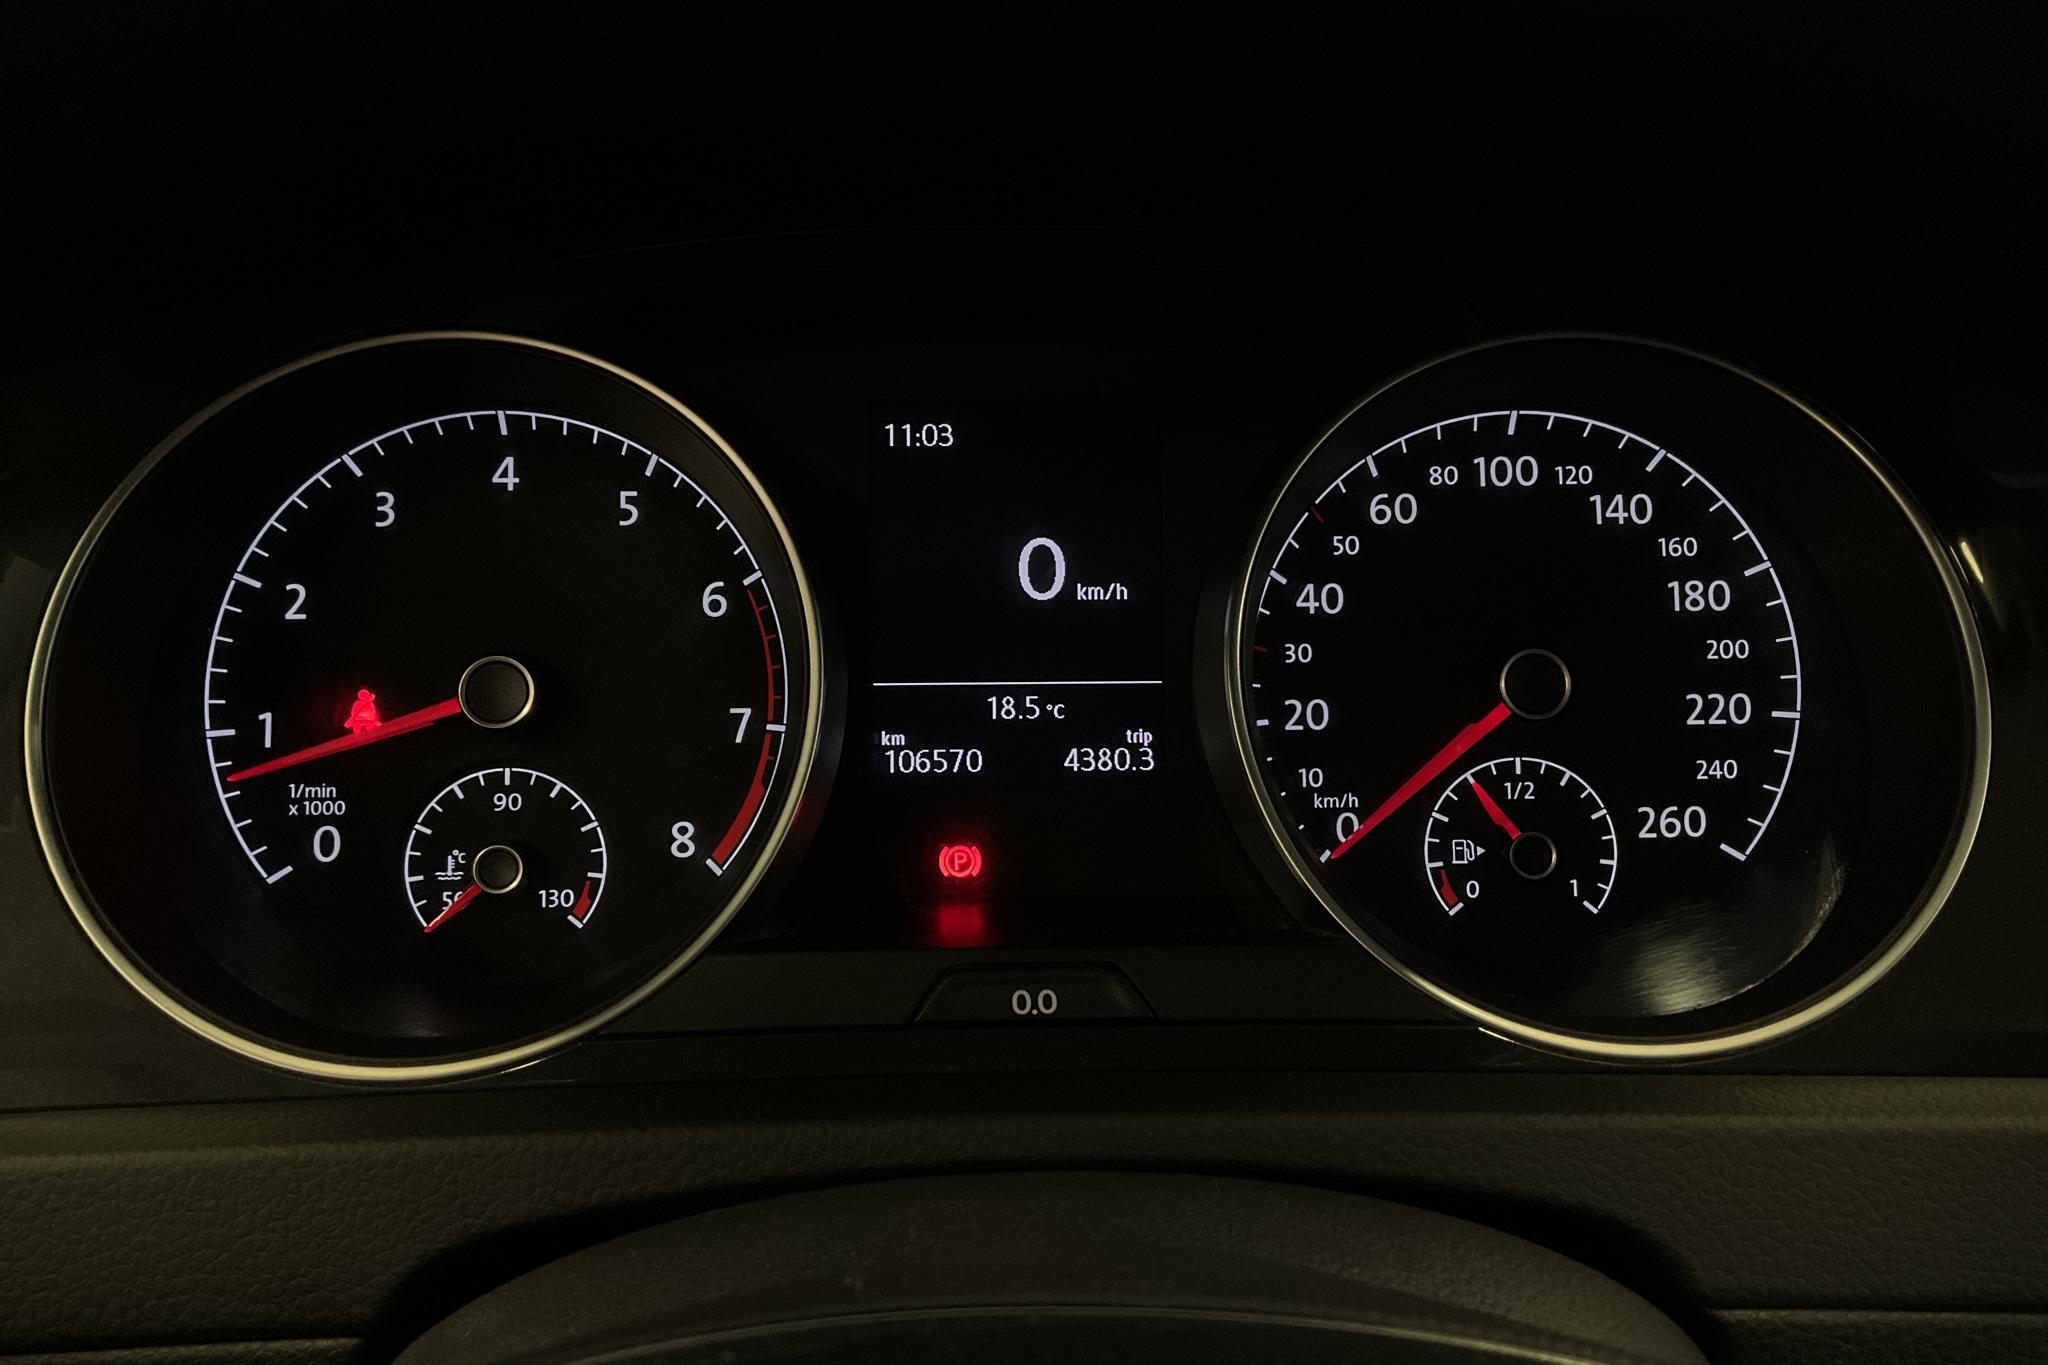 VW Golf VII 1.4 TSI Multifuel 5dr (125hk) - 10 657 mil - Manuell - Dark Grey - 2018